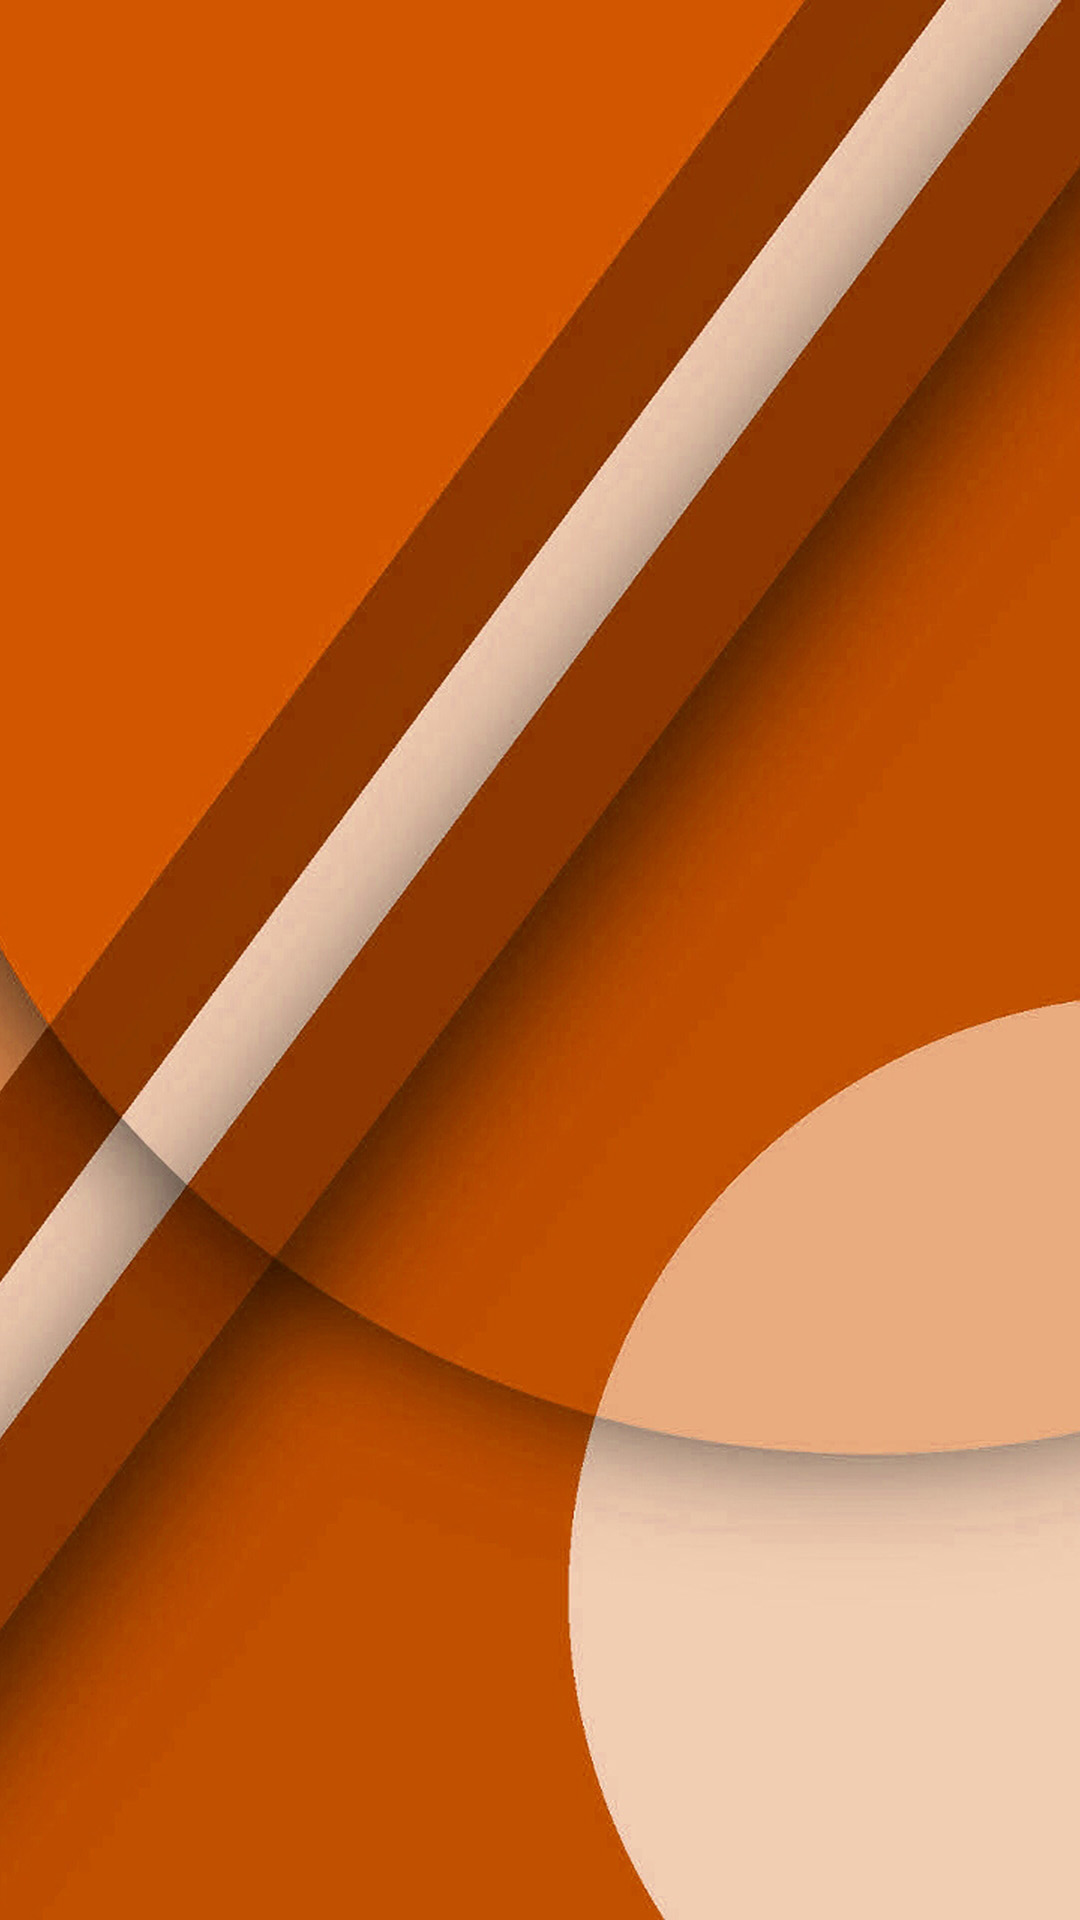 Beautiful Orange Geometric iPhone Plus Wallpaper